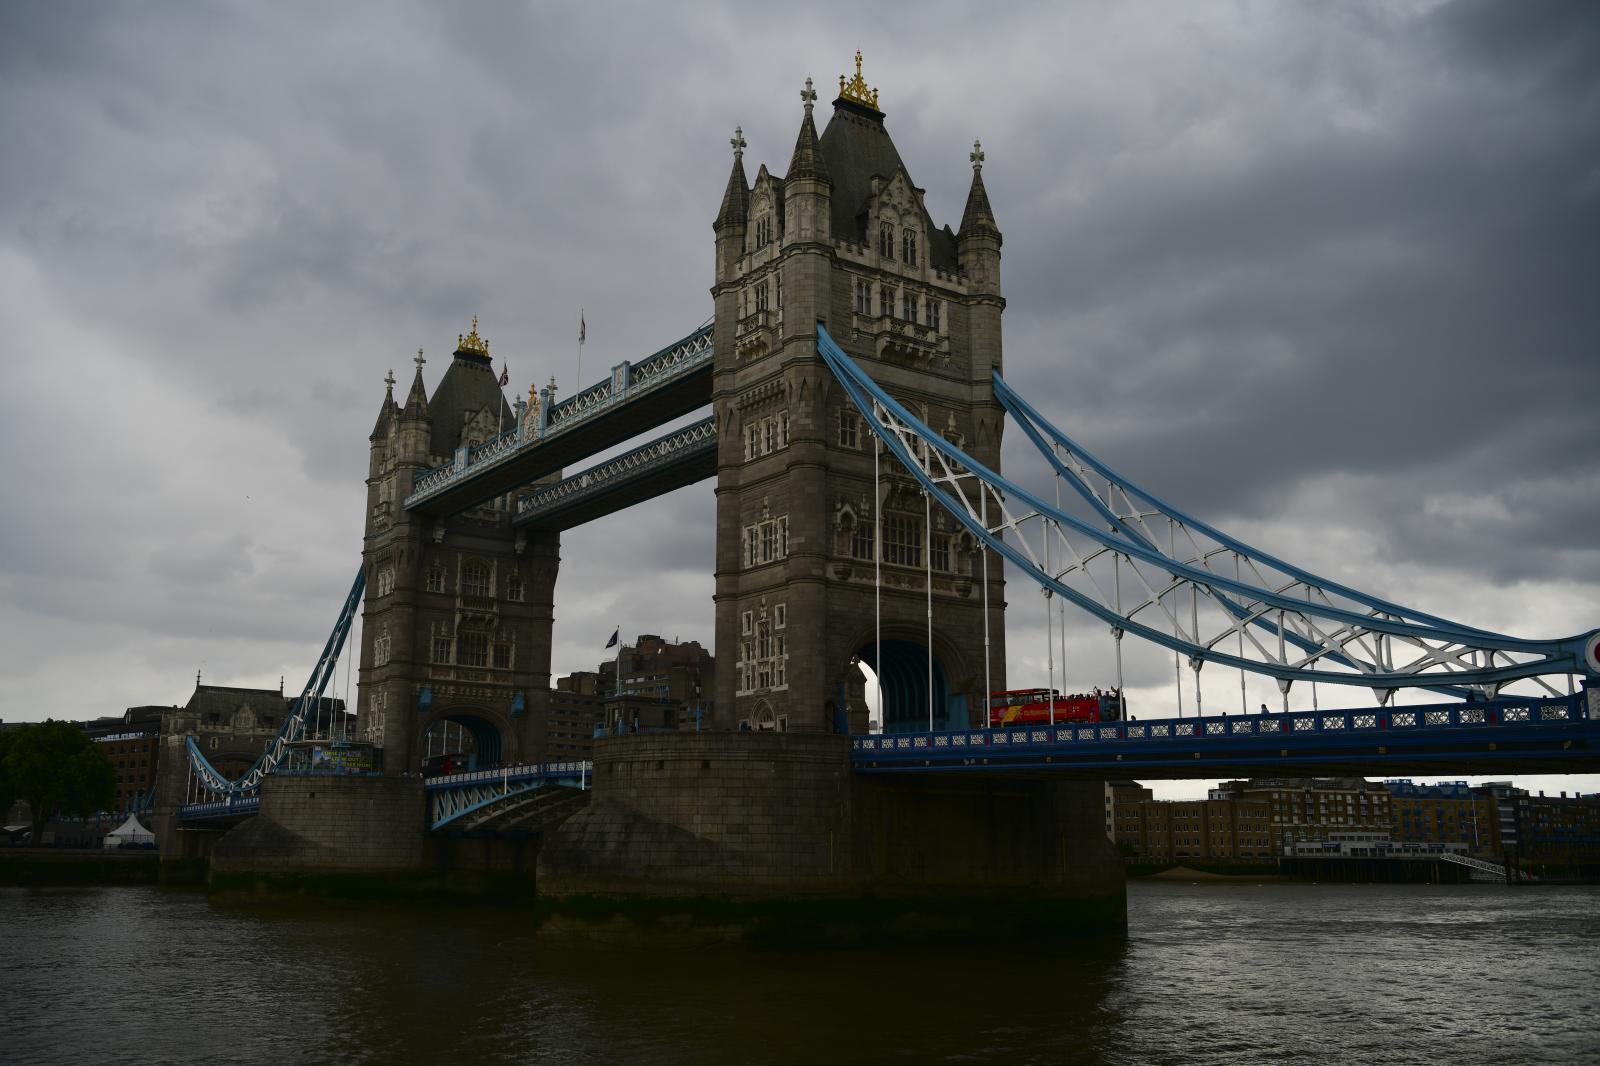 Image from Daily Life UK - Tower Bridge, London